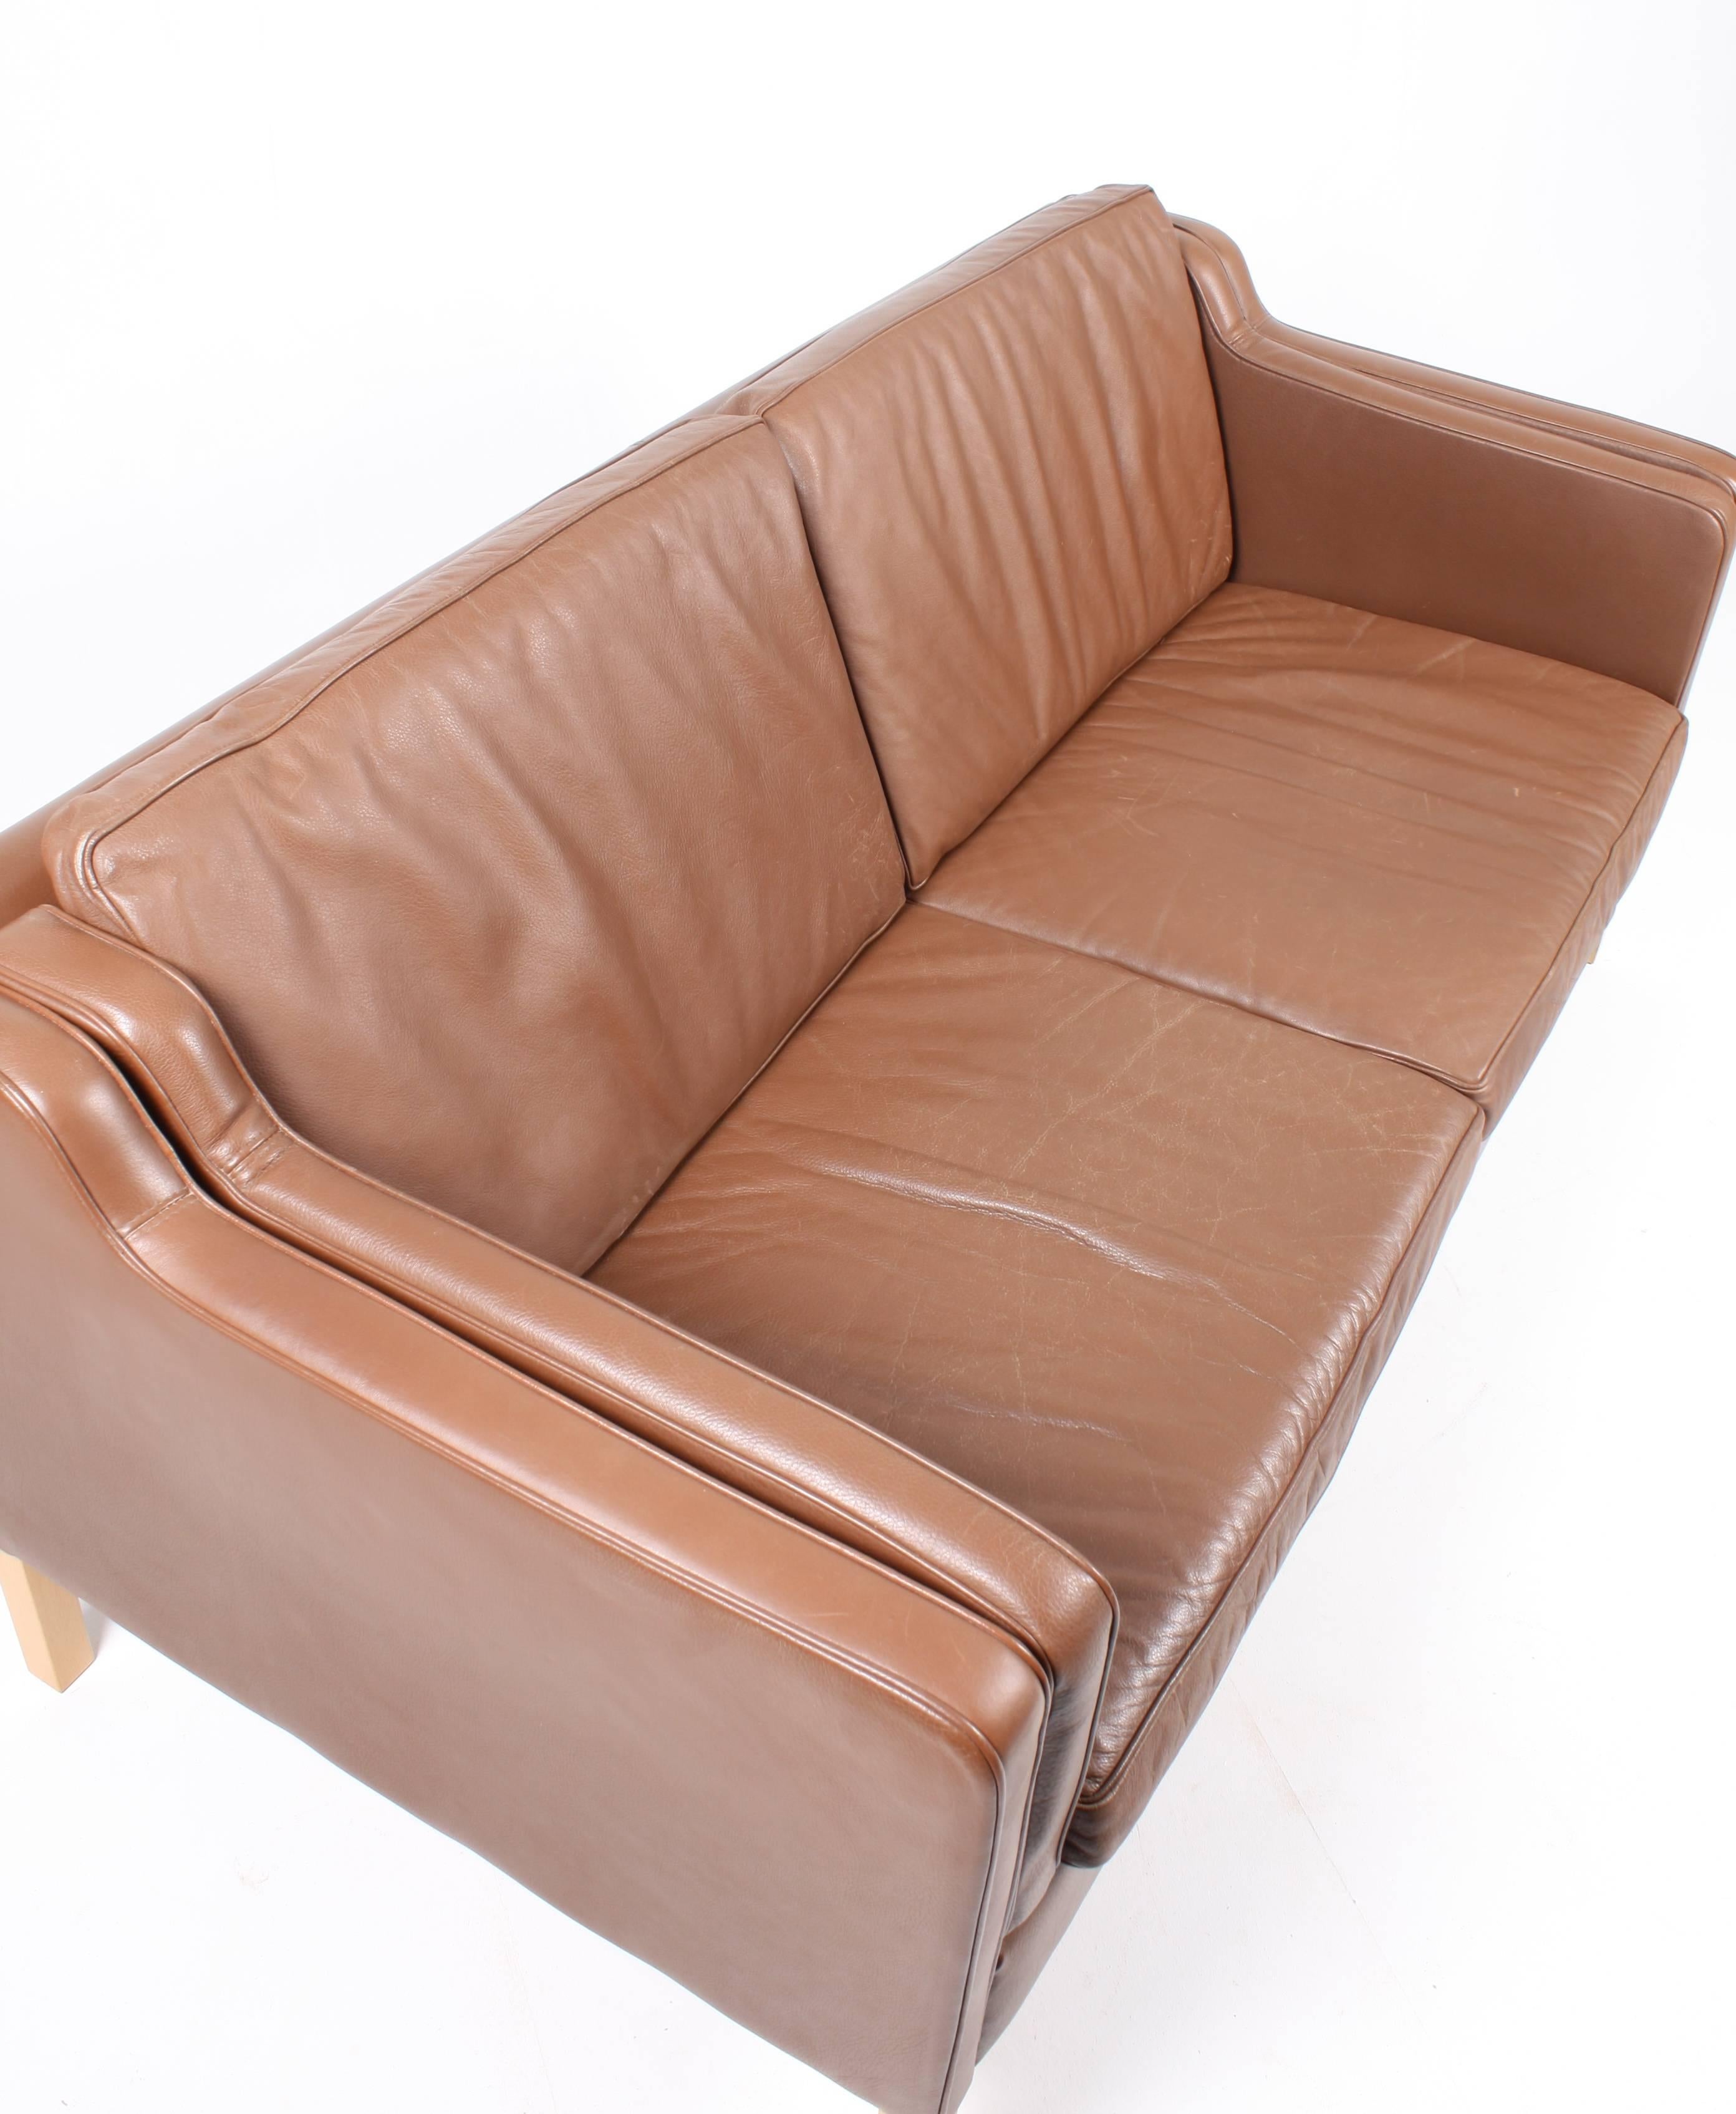 Leather Danish Two-Seat Sofa